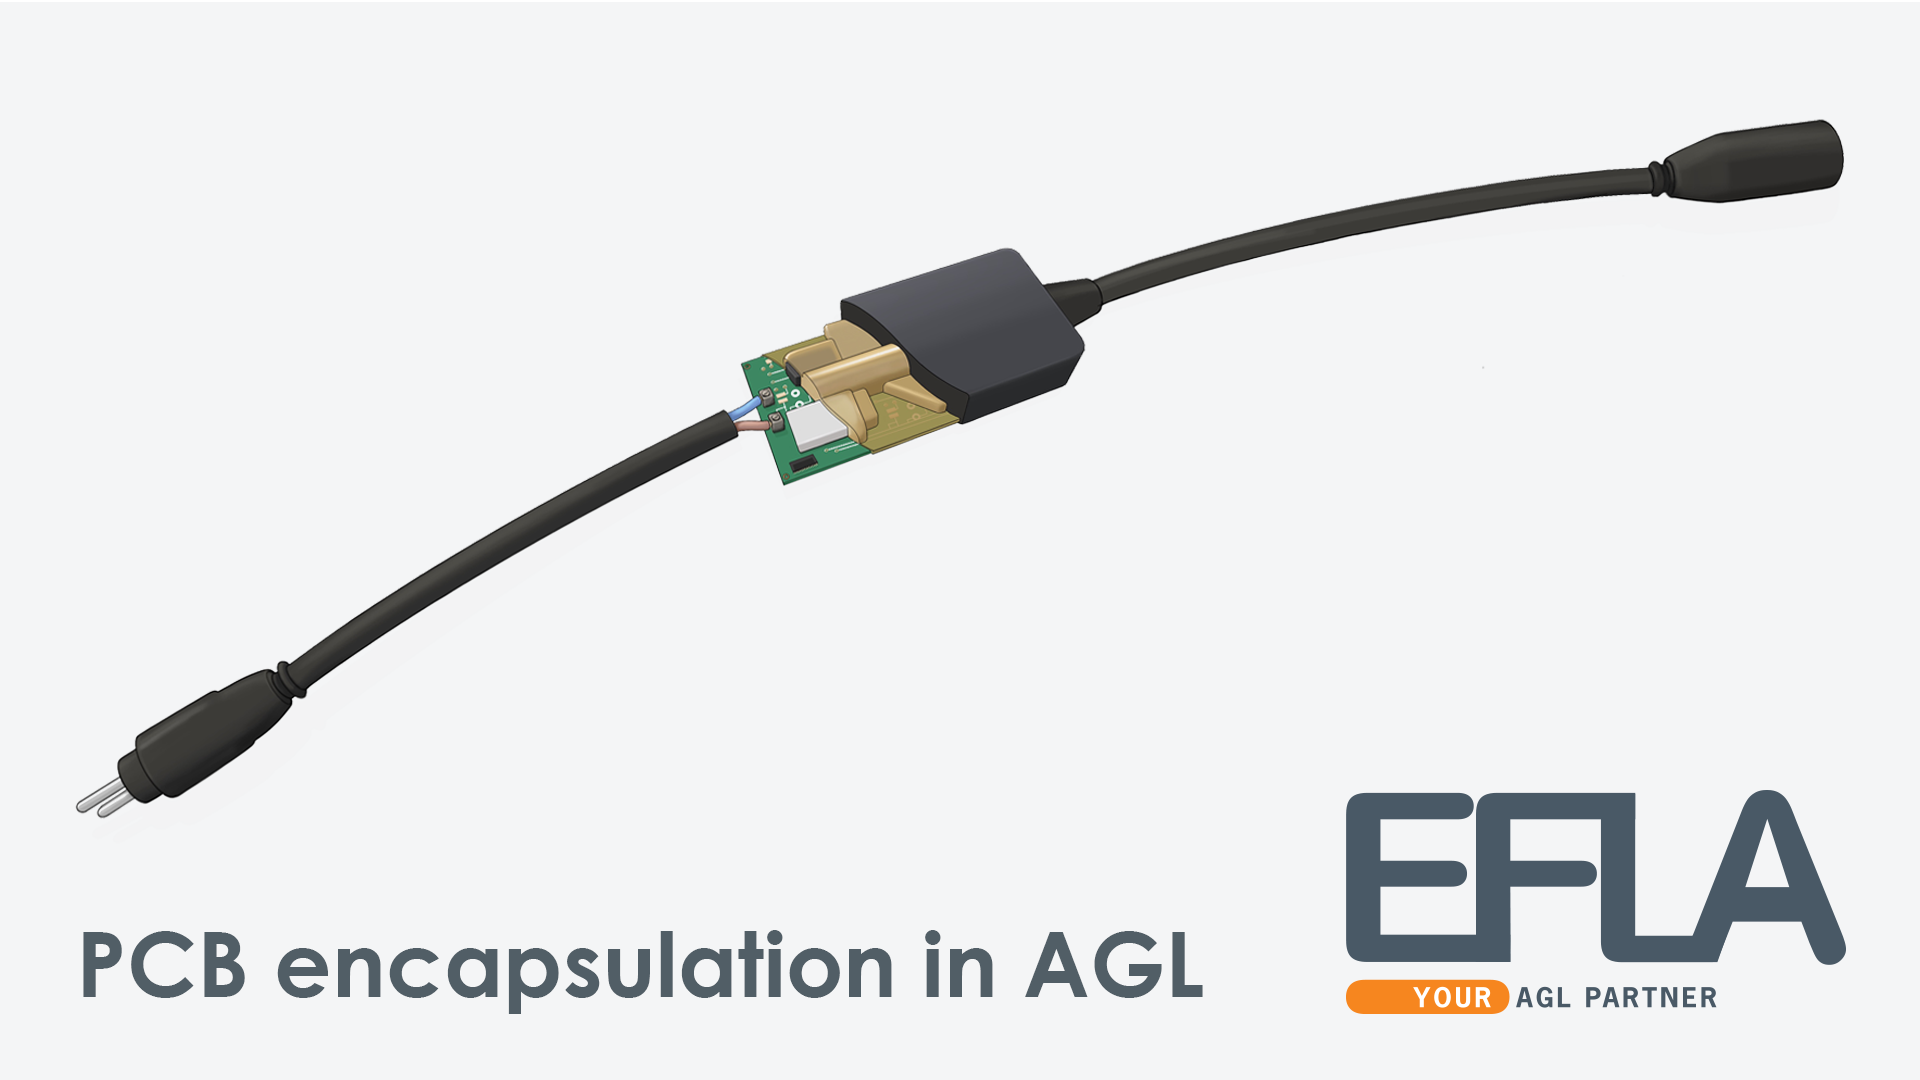 A development of PC-Board encapsulation in AGL circuit